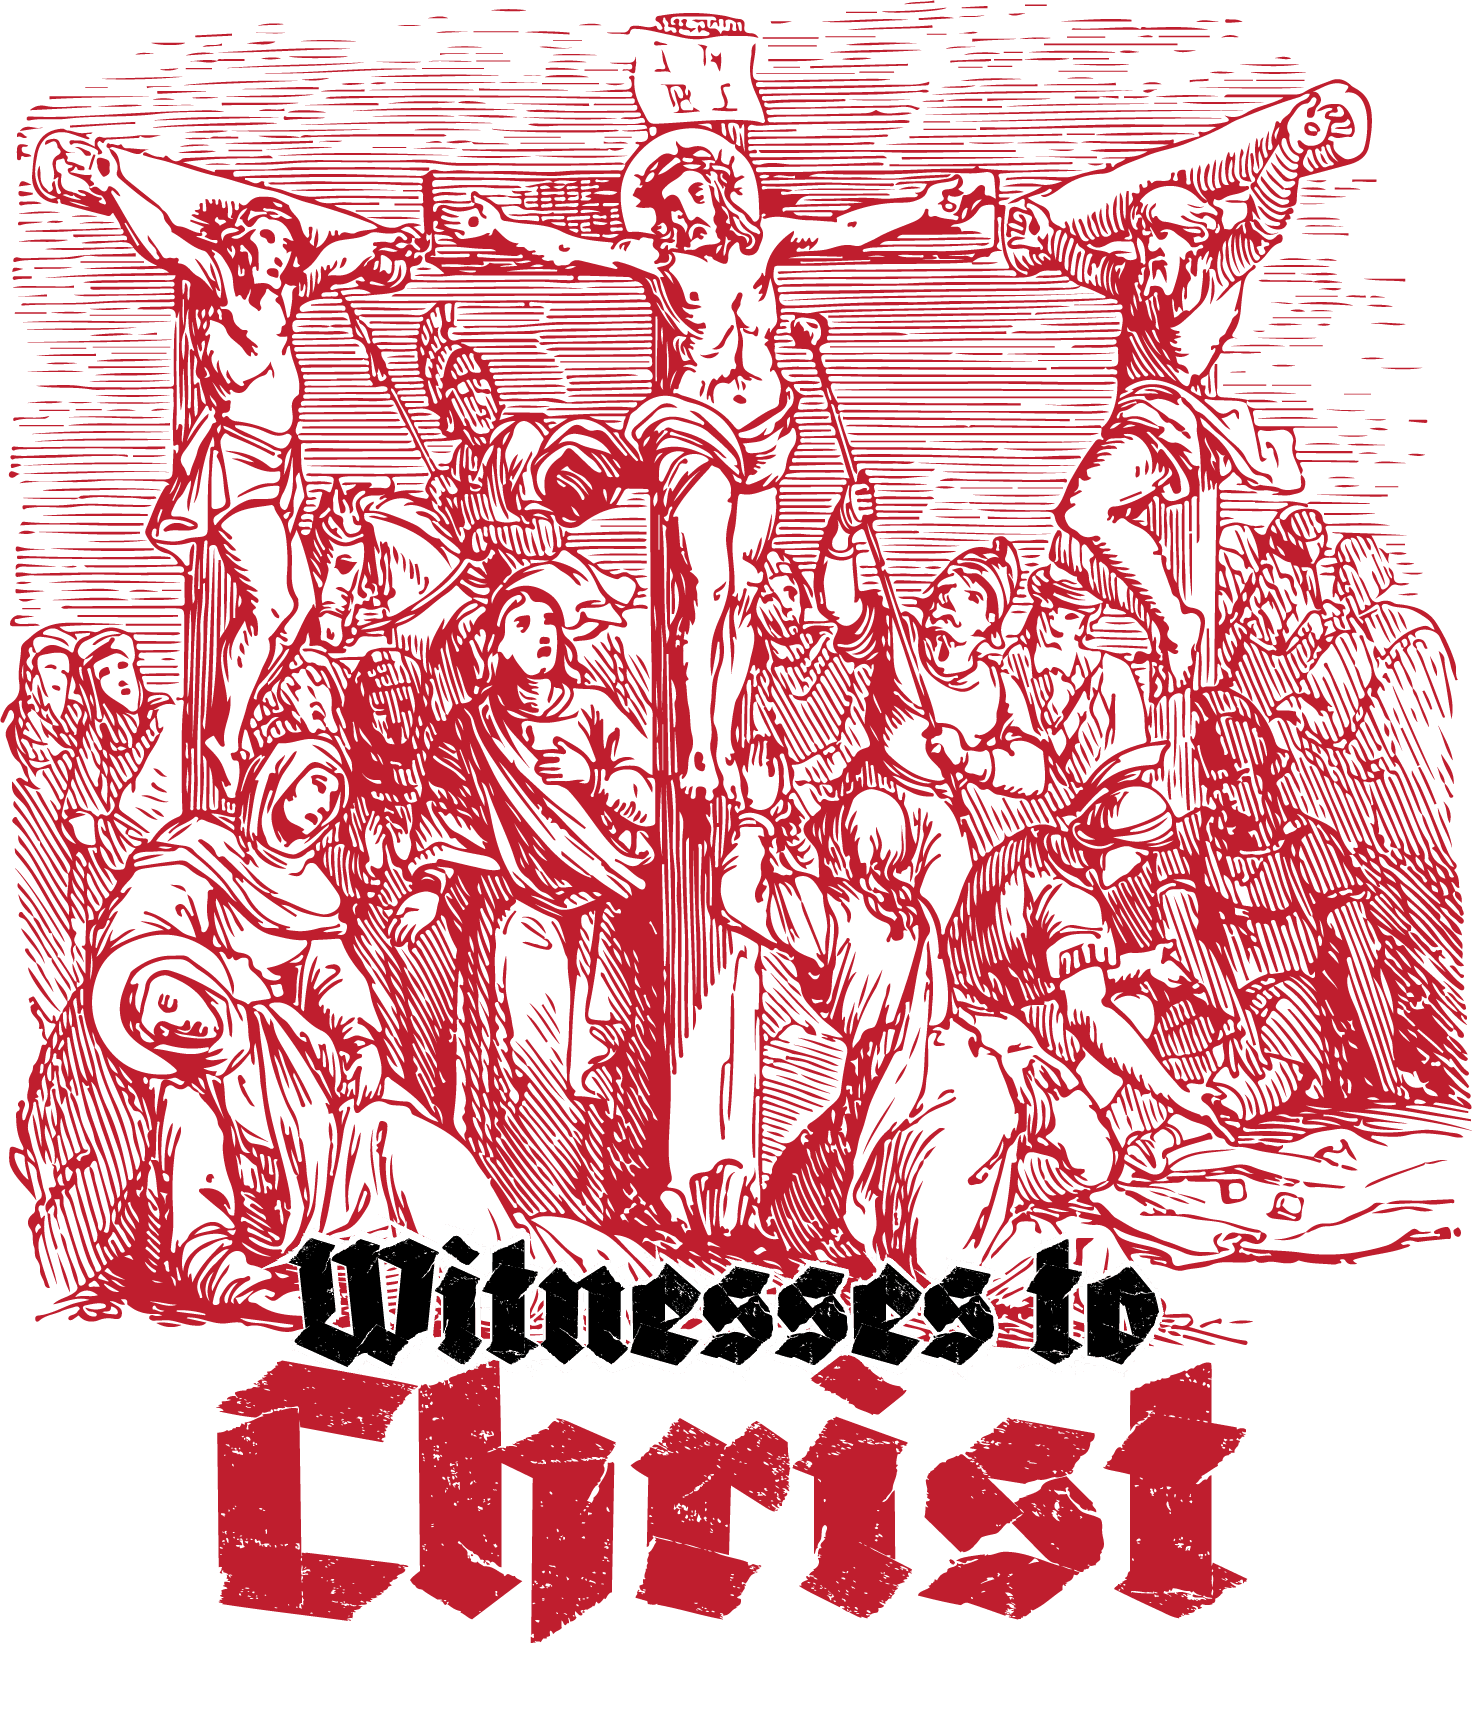 Witnesses to Christ – Malchus